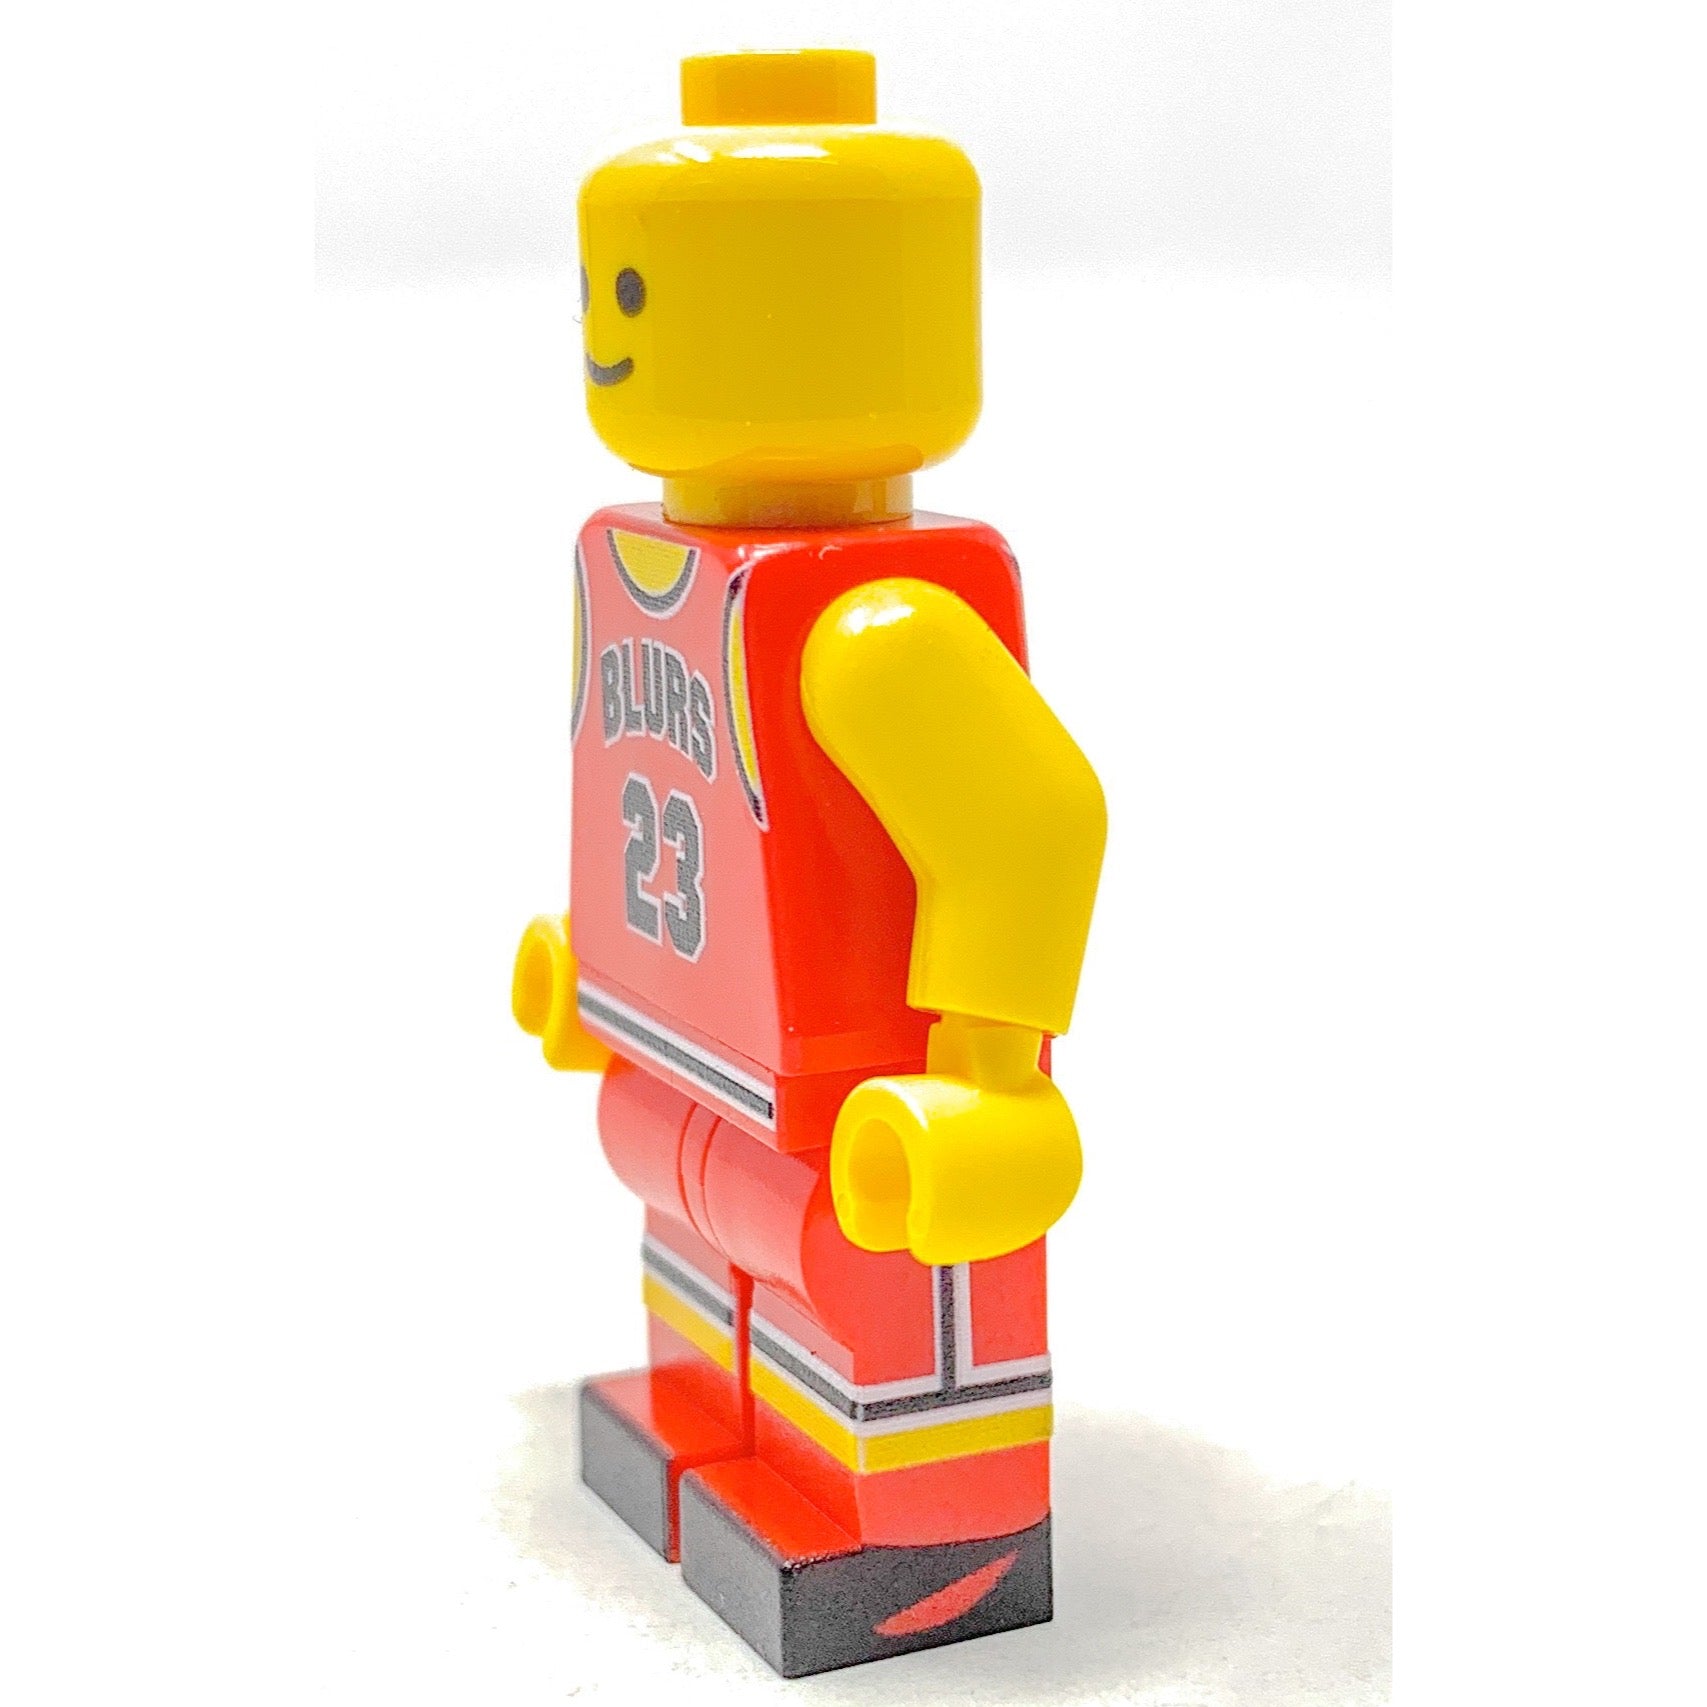 #23 Chicago Blurs - B3 Custom® Basketball Player Minifig